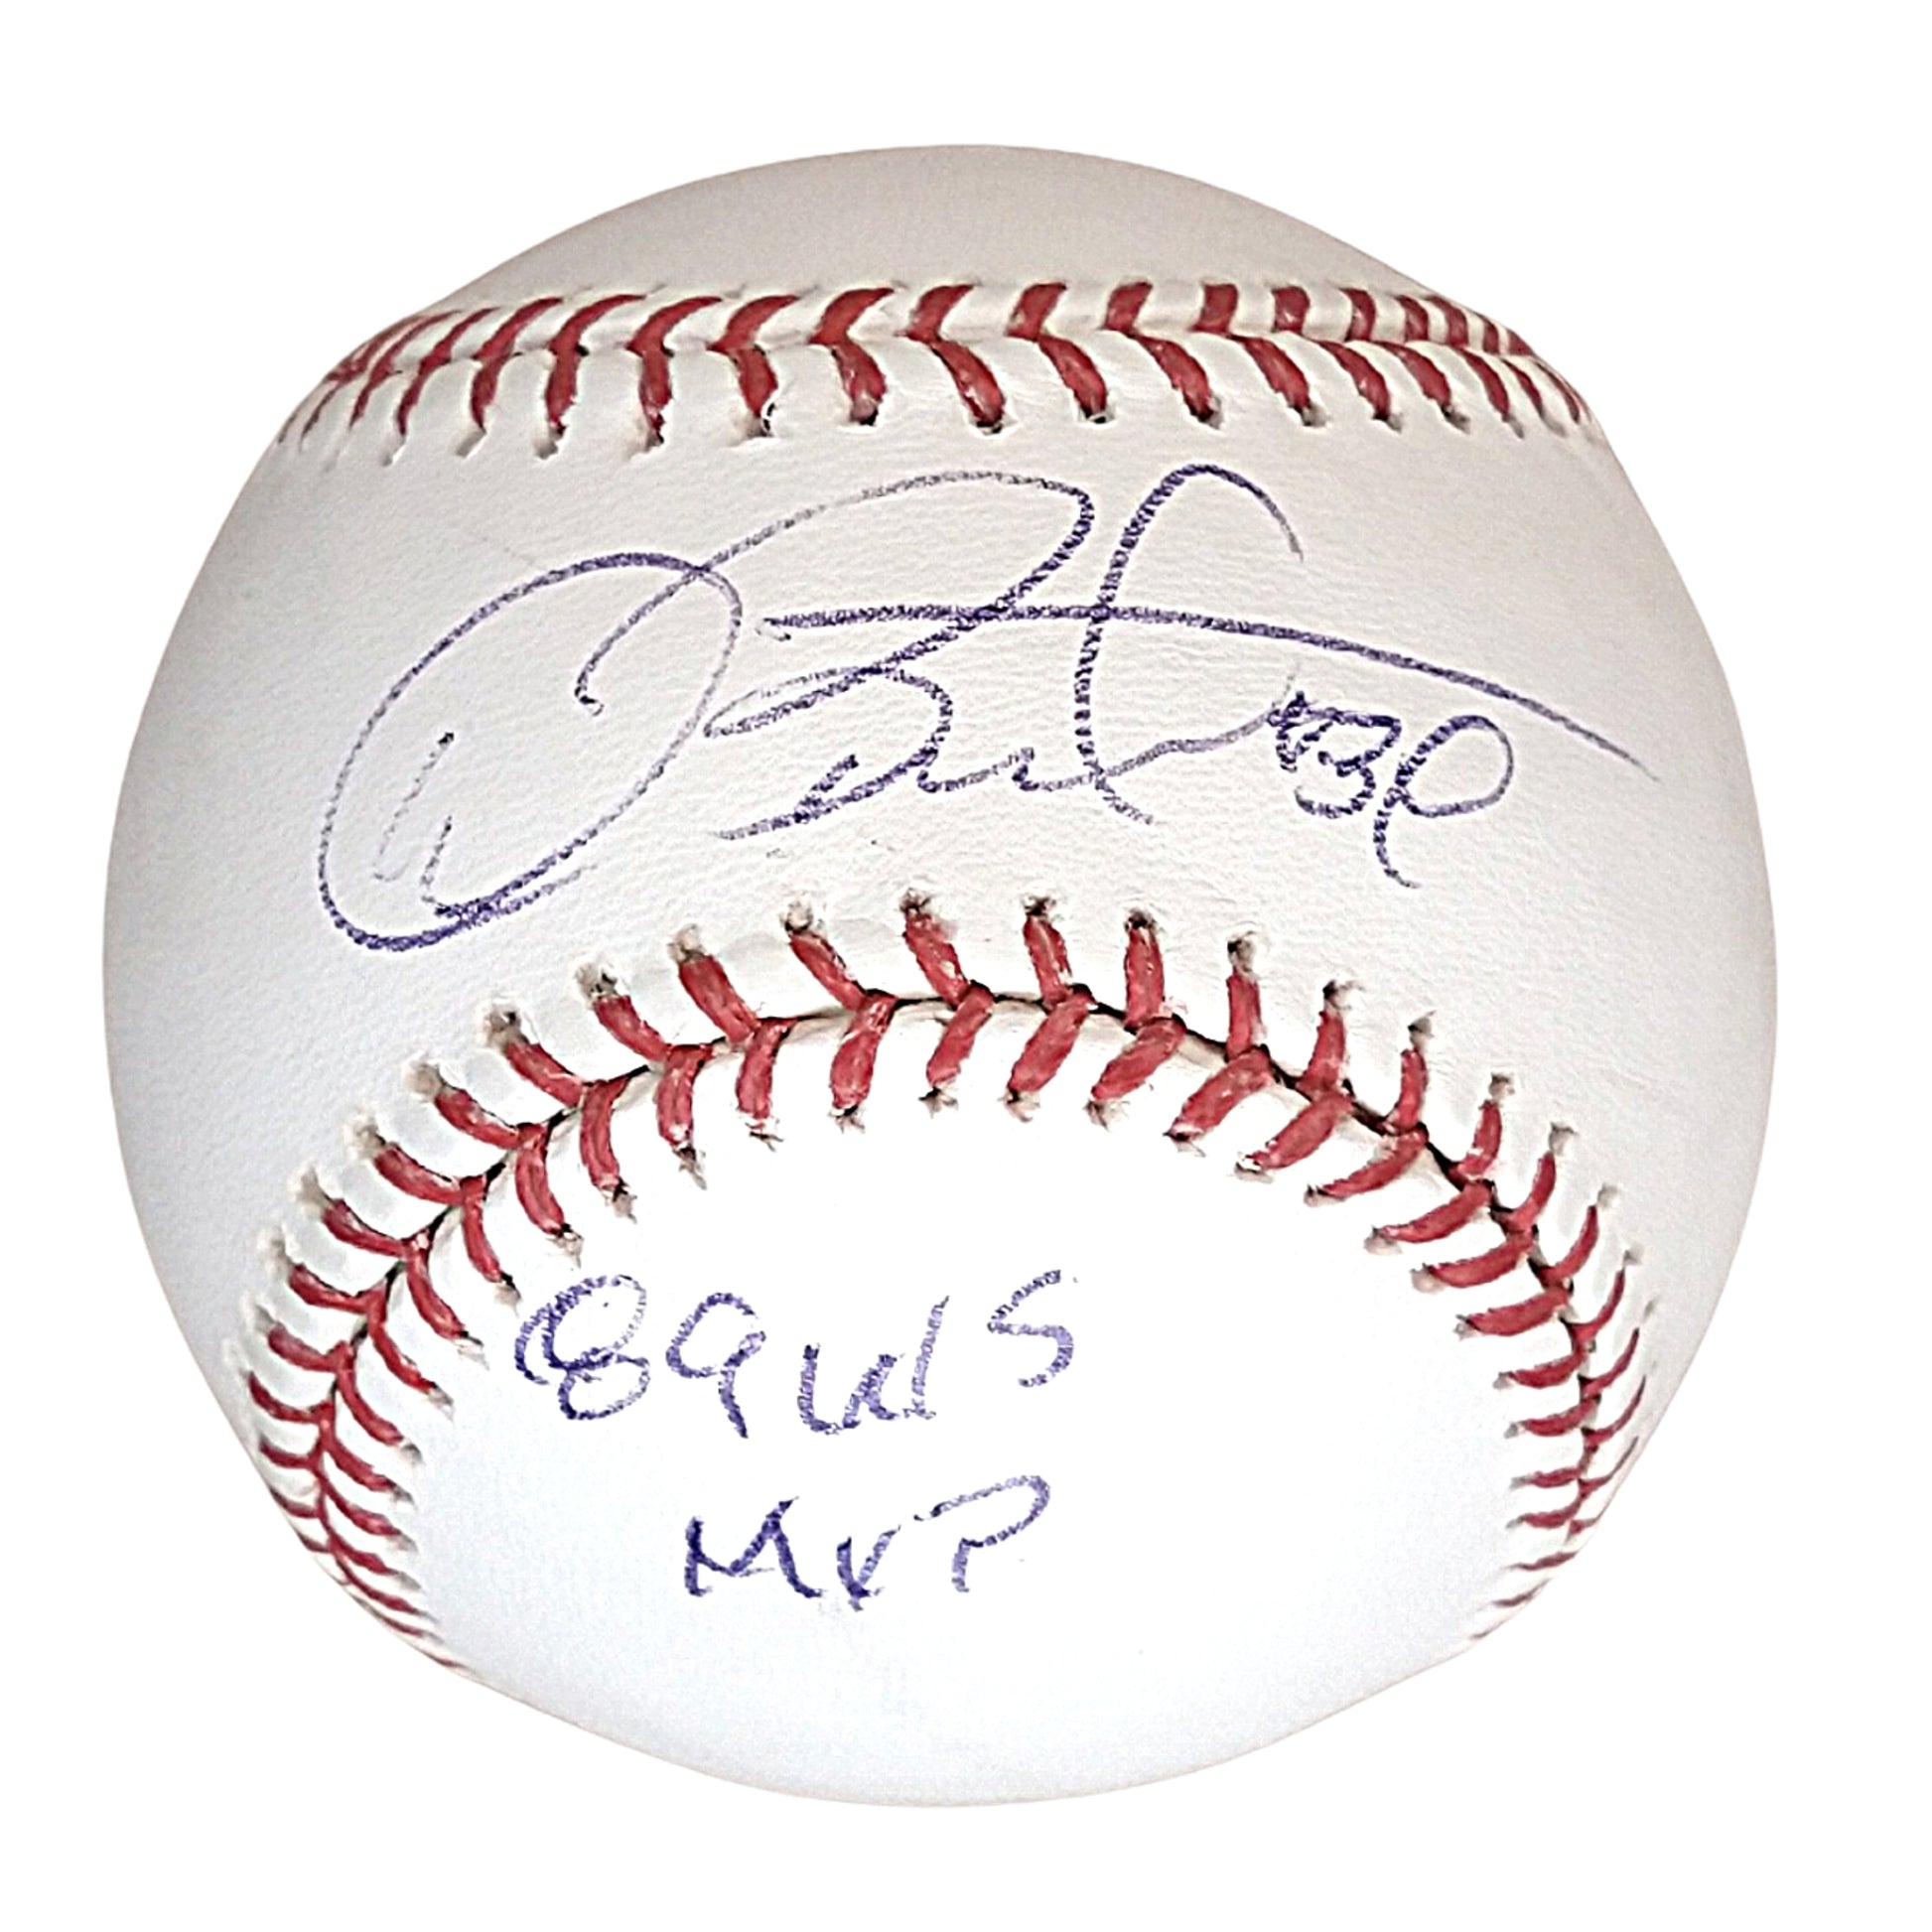 Autographed/Signed Dennis Eckersley Oakland Yellow Baseball Jersey